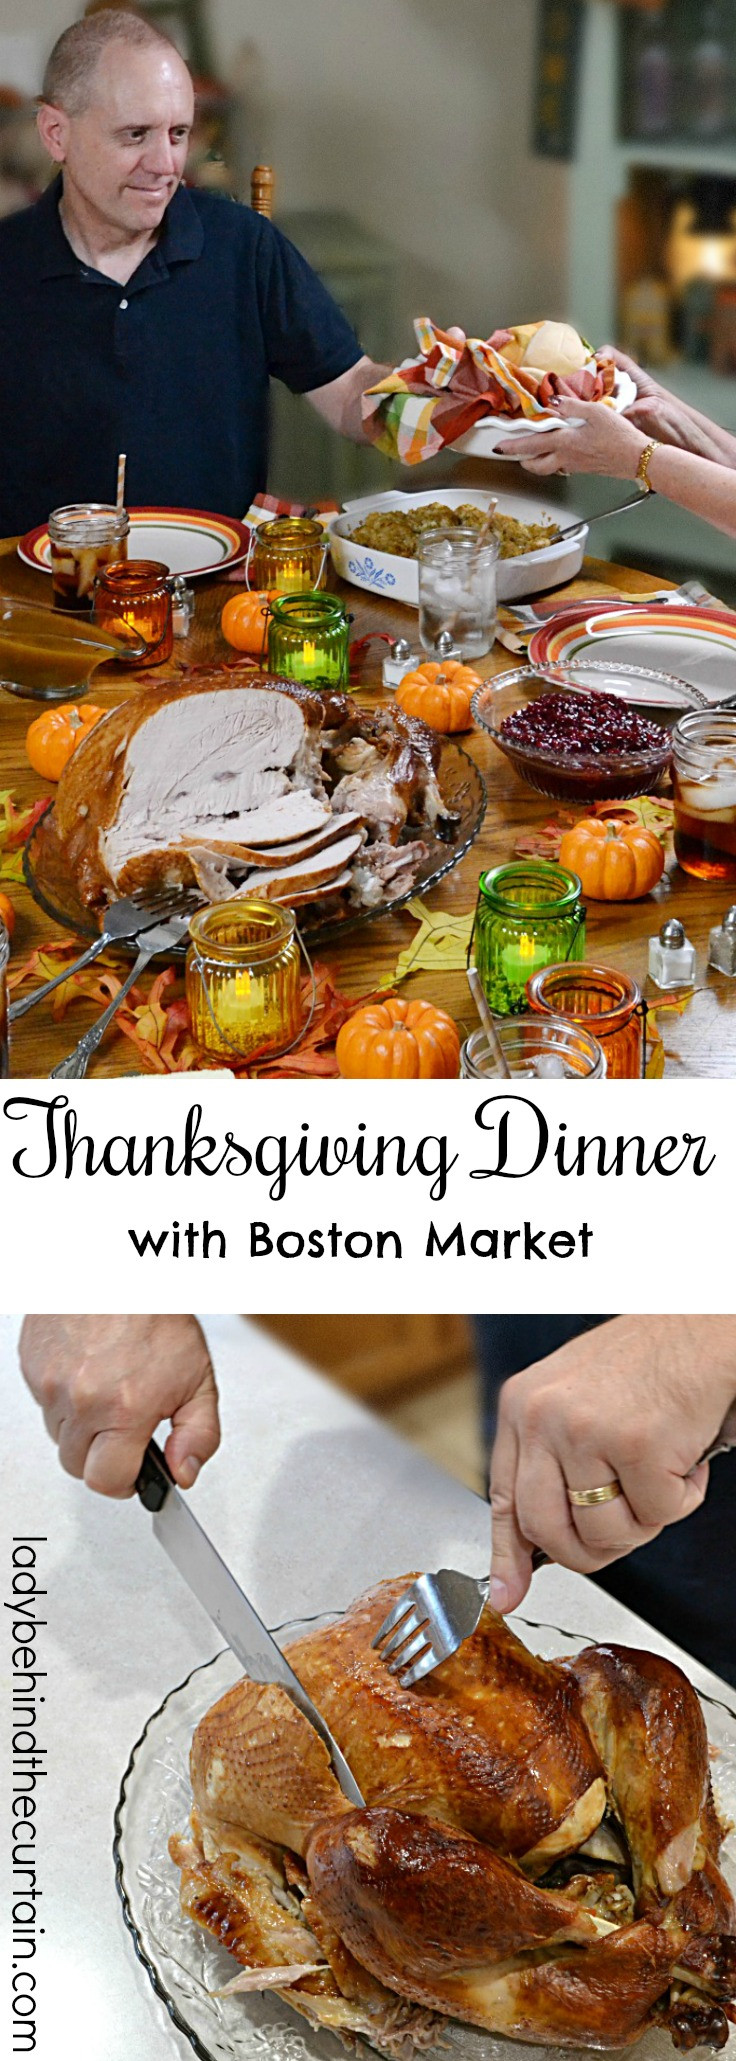 Boston Market Thanksgiving Dinners To Go
 Thanksgiving Dinner with Boston Market